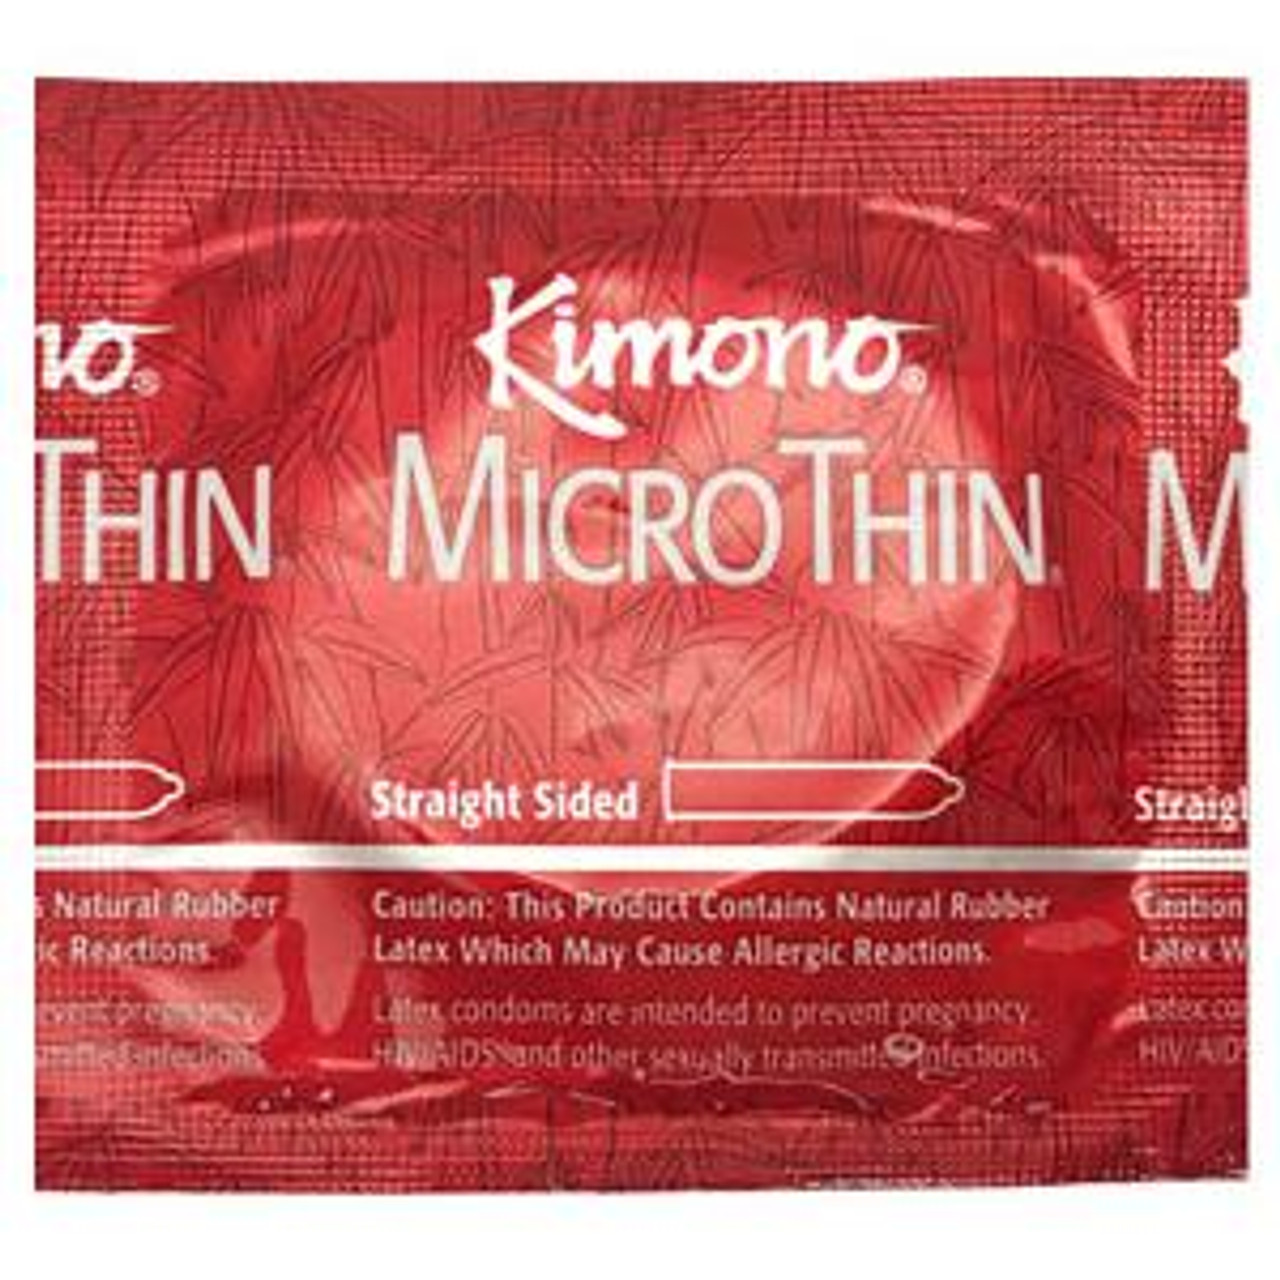 Kimono MicroThin Condoms | Buy Kimono Condoms online from CondomDepot.com